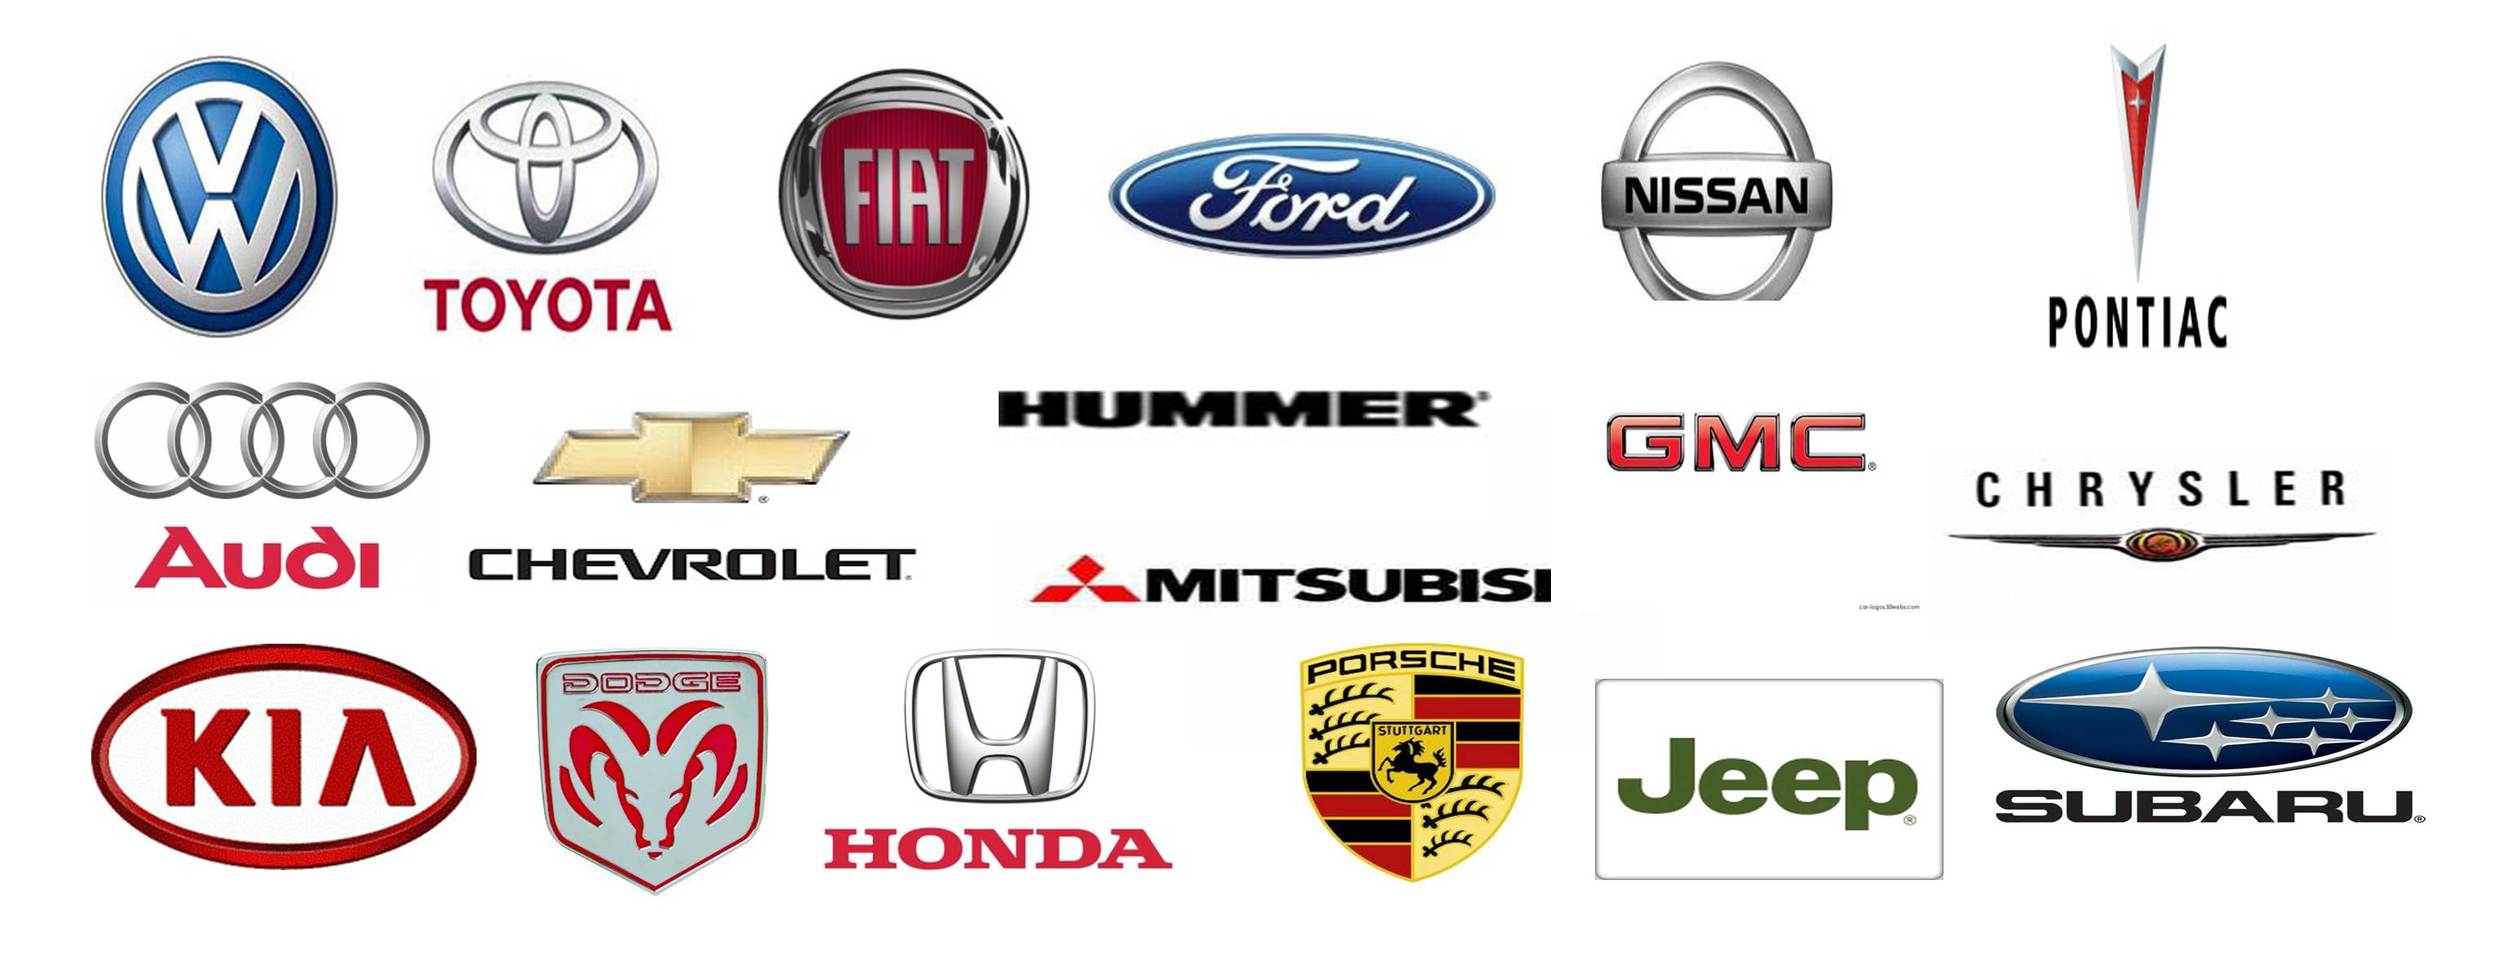 Car Dealership Logos